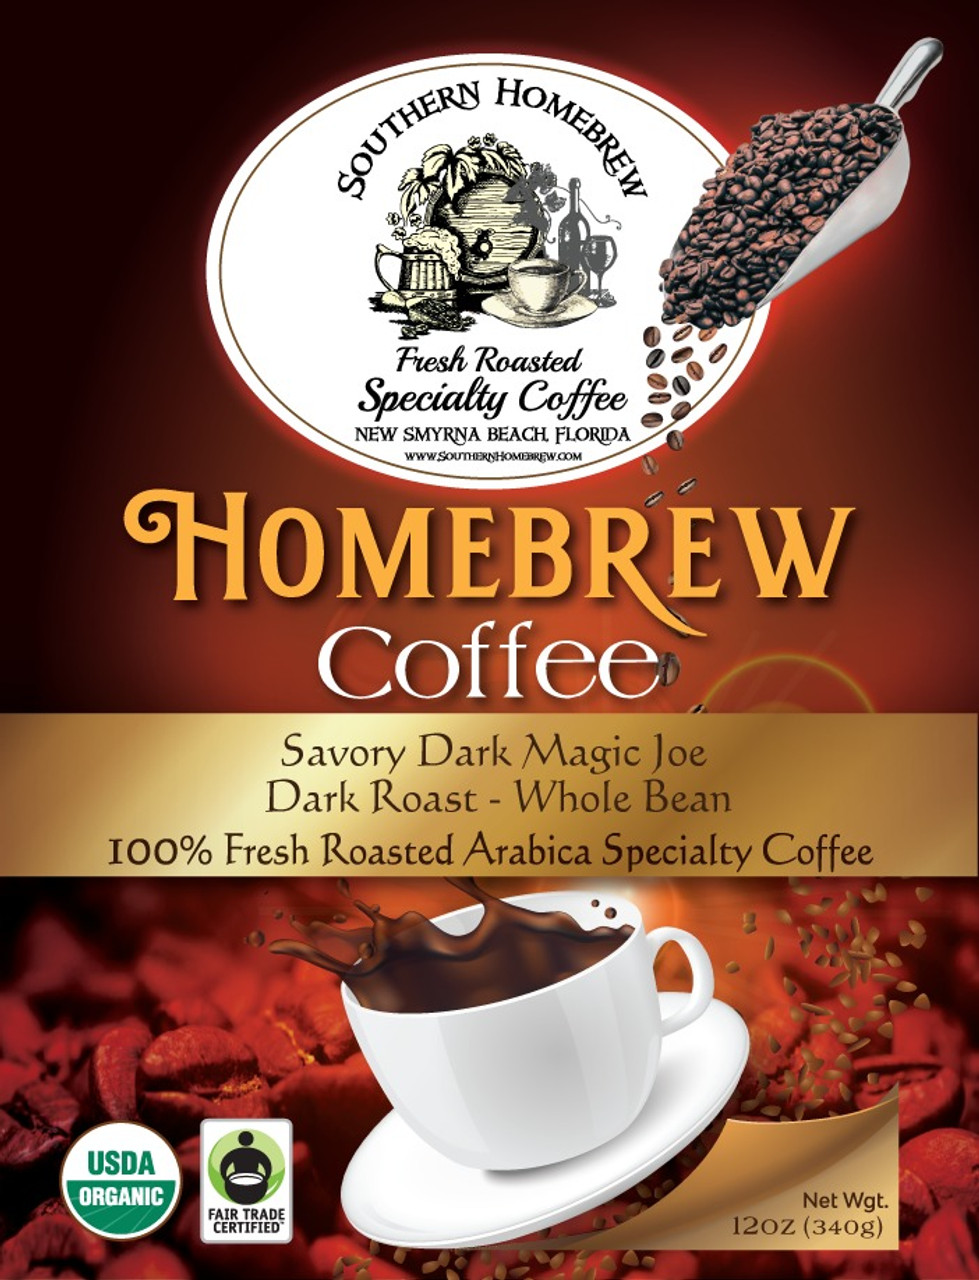 https://cdn11.bigcommerce.com/s-hb88tx65hv/images/stencil/1280x1280/products/1669/2194/Southern-Homebrew-Savory-Dark-Magic-Joe-Dark-Roast-Whole-Bean-Organic-Arabica-Coffee-Frontlabel-12oz__36487.1678465941.jpg?c=1